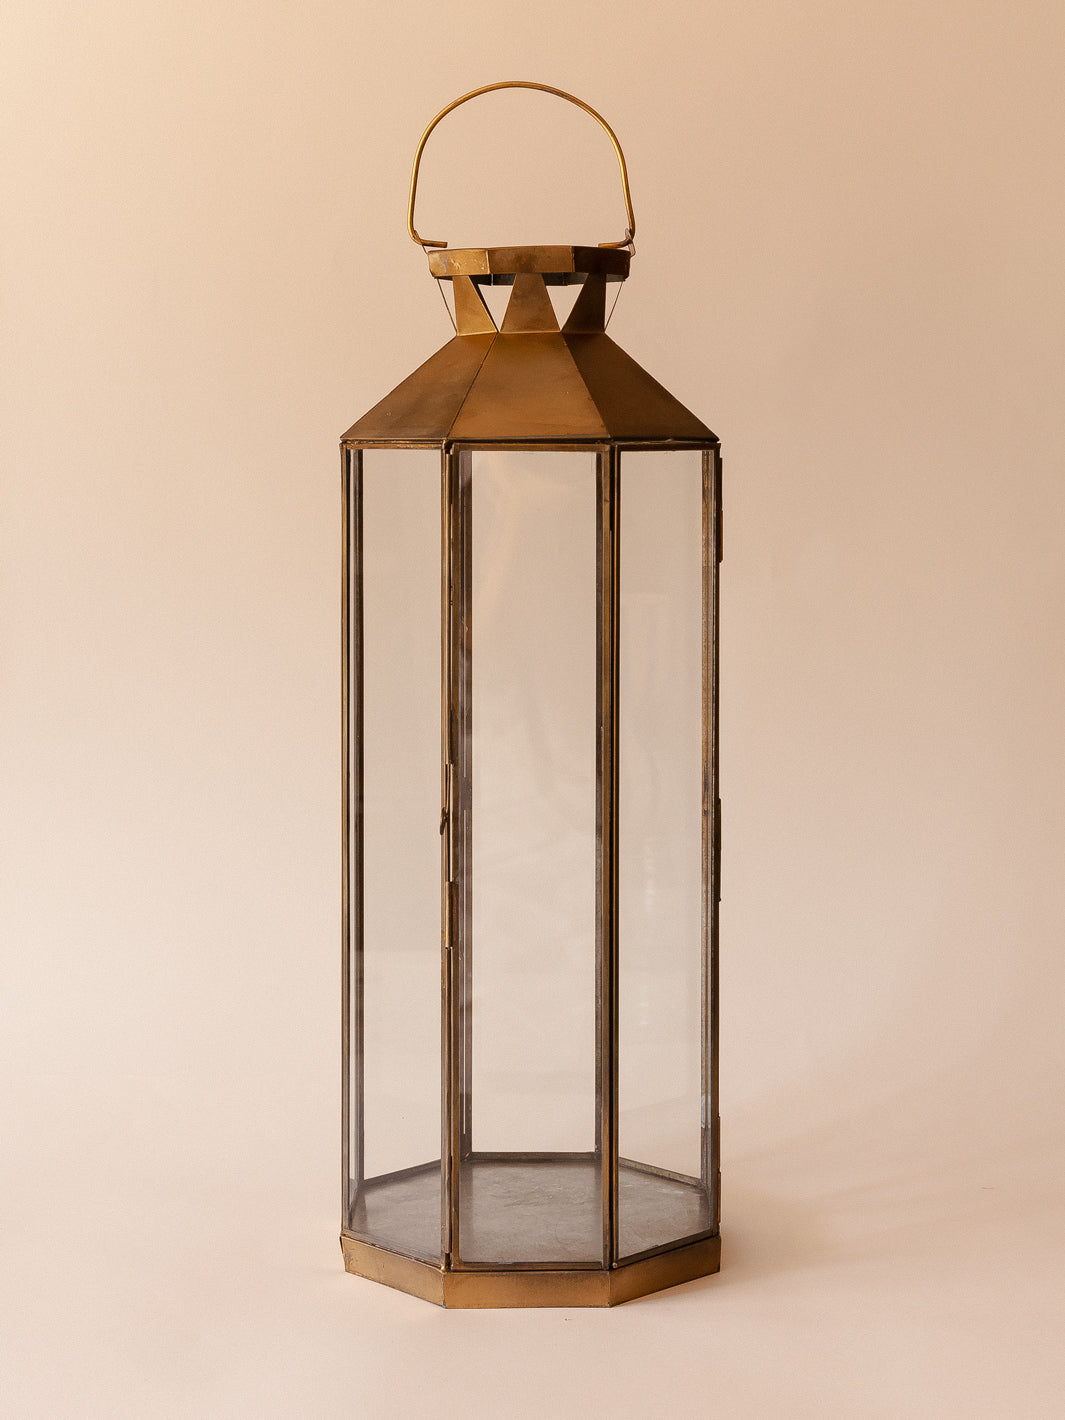 Octagonal golden iron lantern